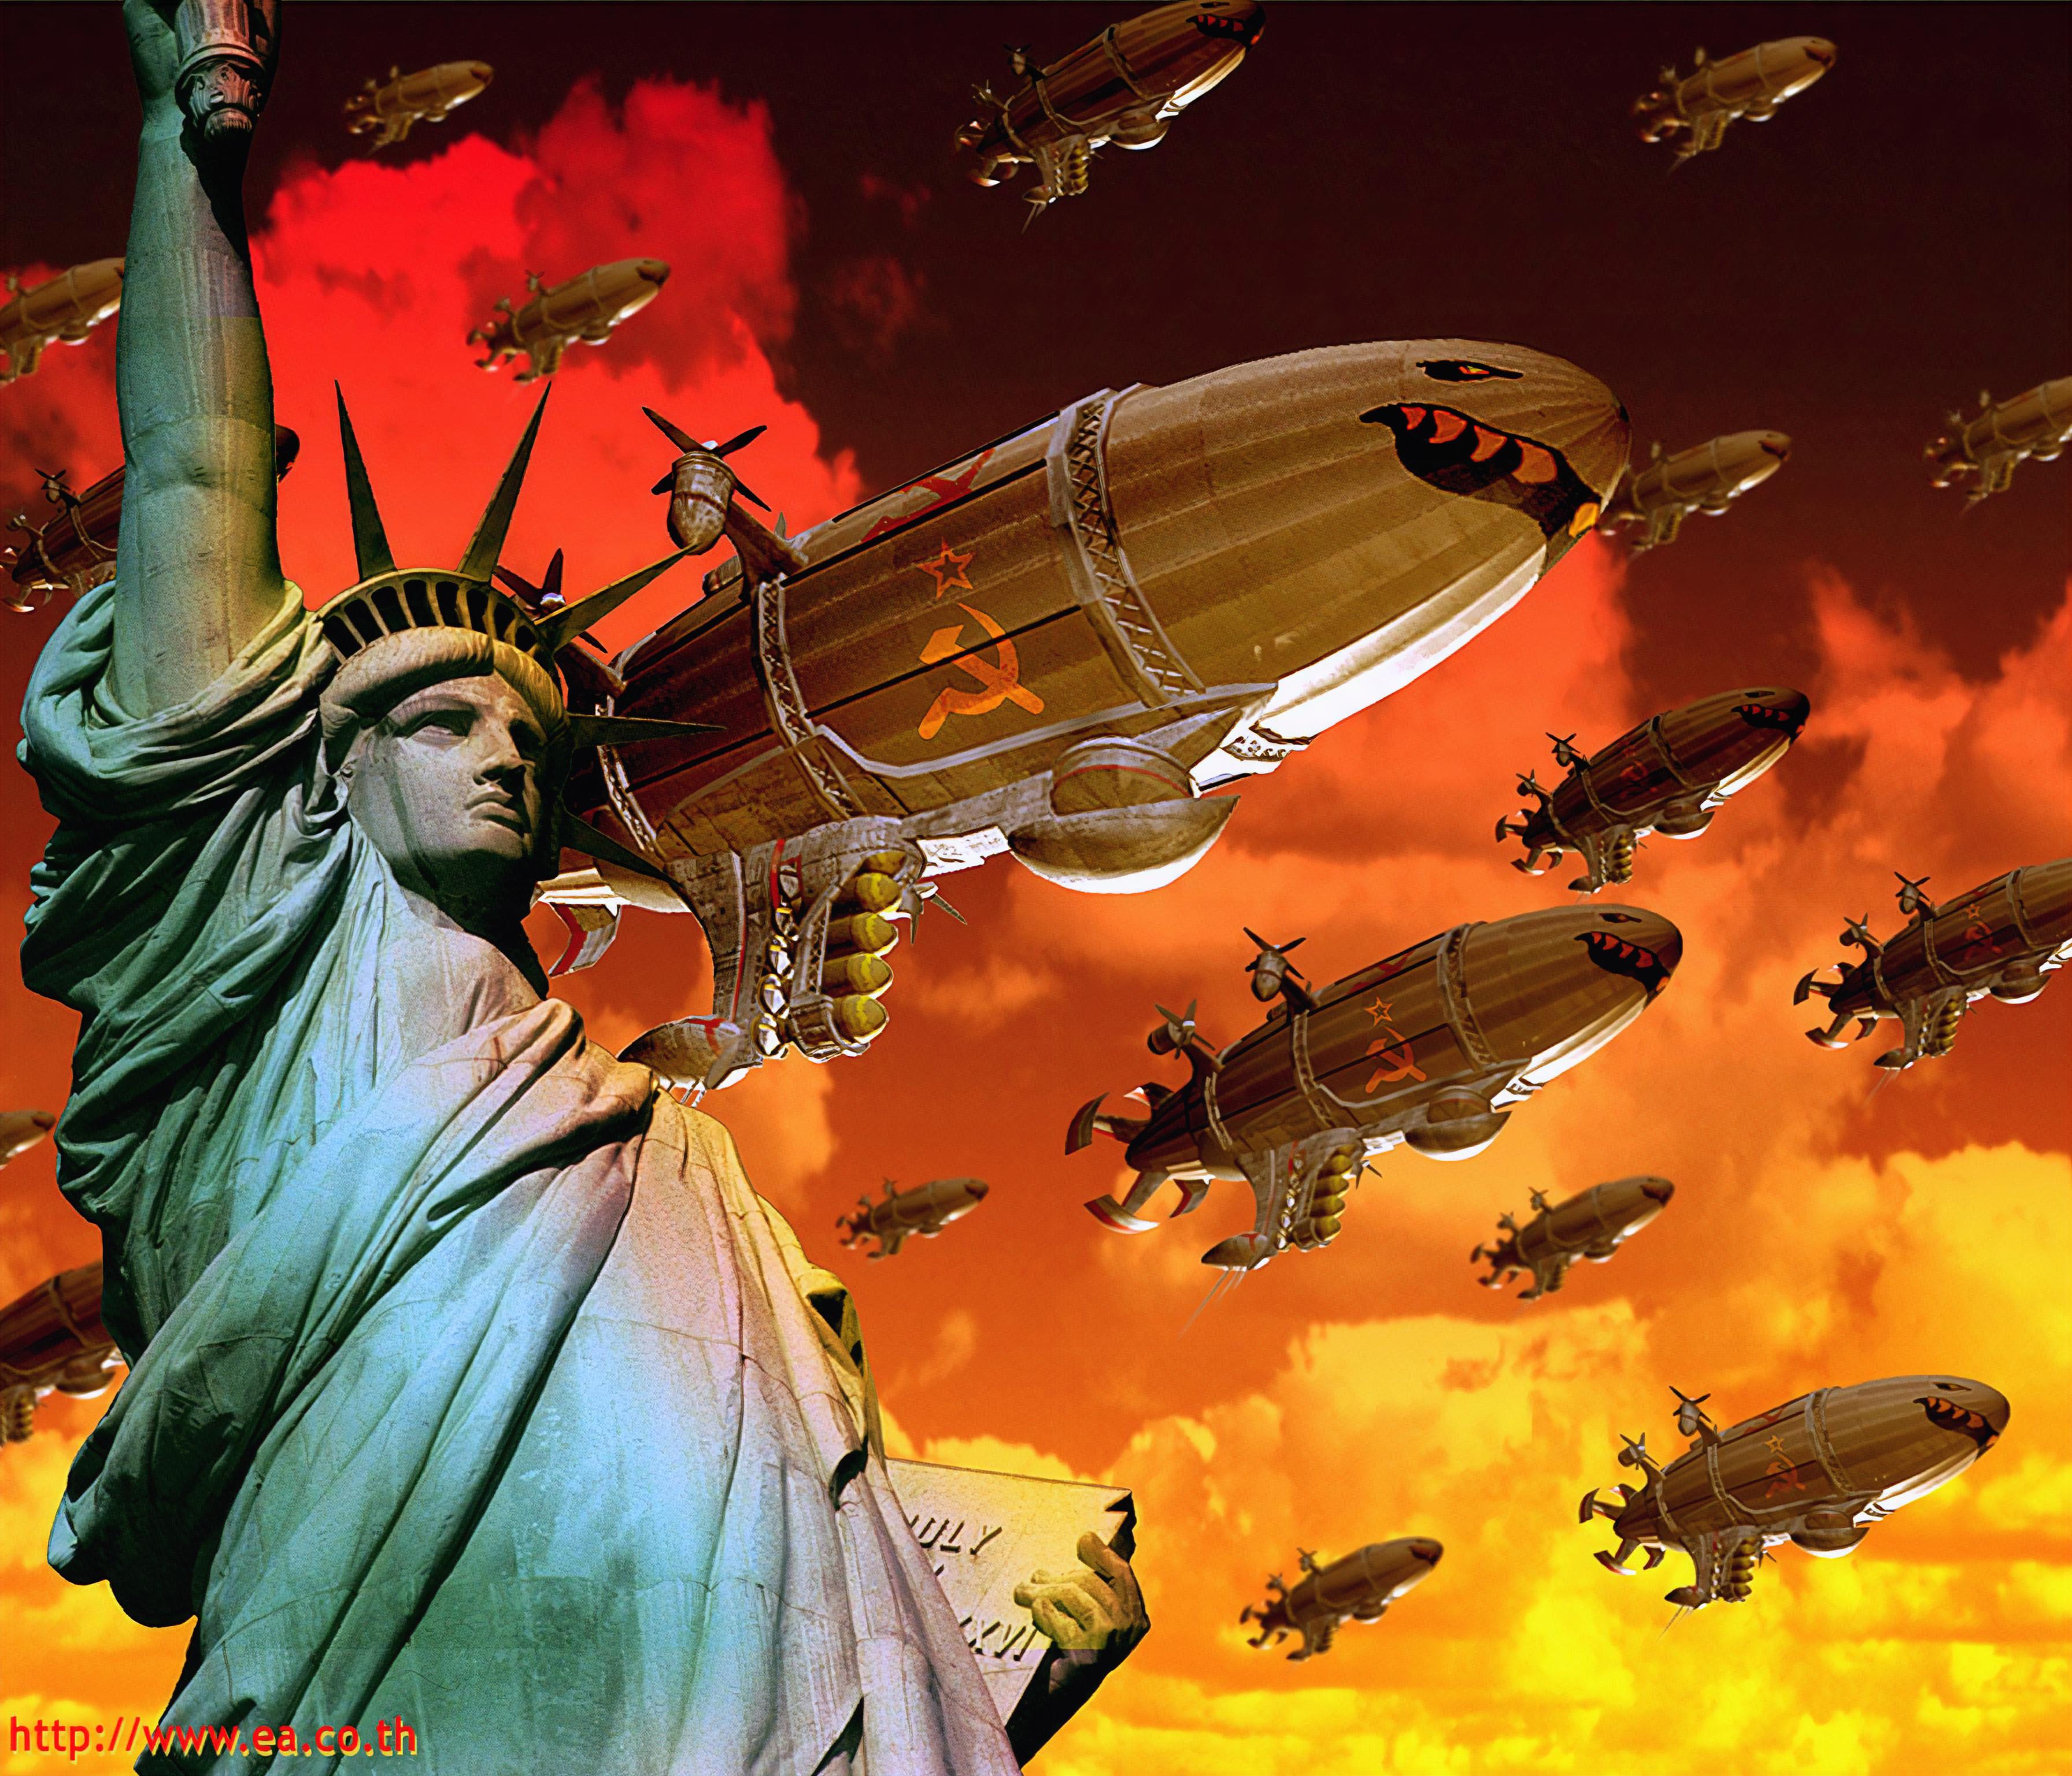 General 3584x3072 Command & Conquer red alert 2 Statue of Liberty USSR Zeppelin orange sky video game art nostalgia digital art